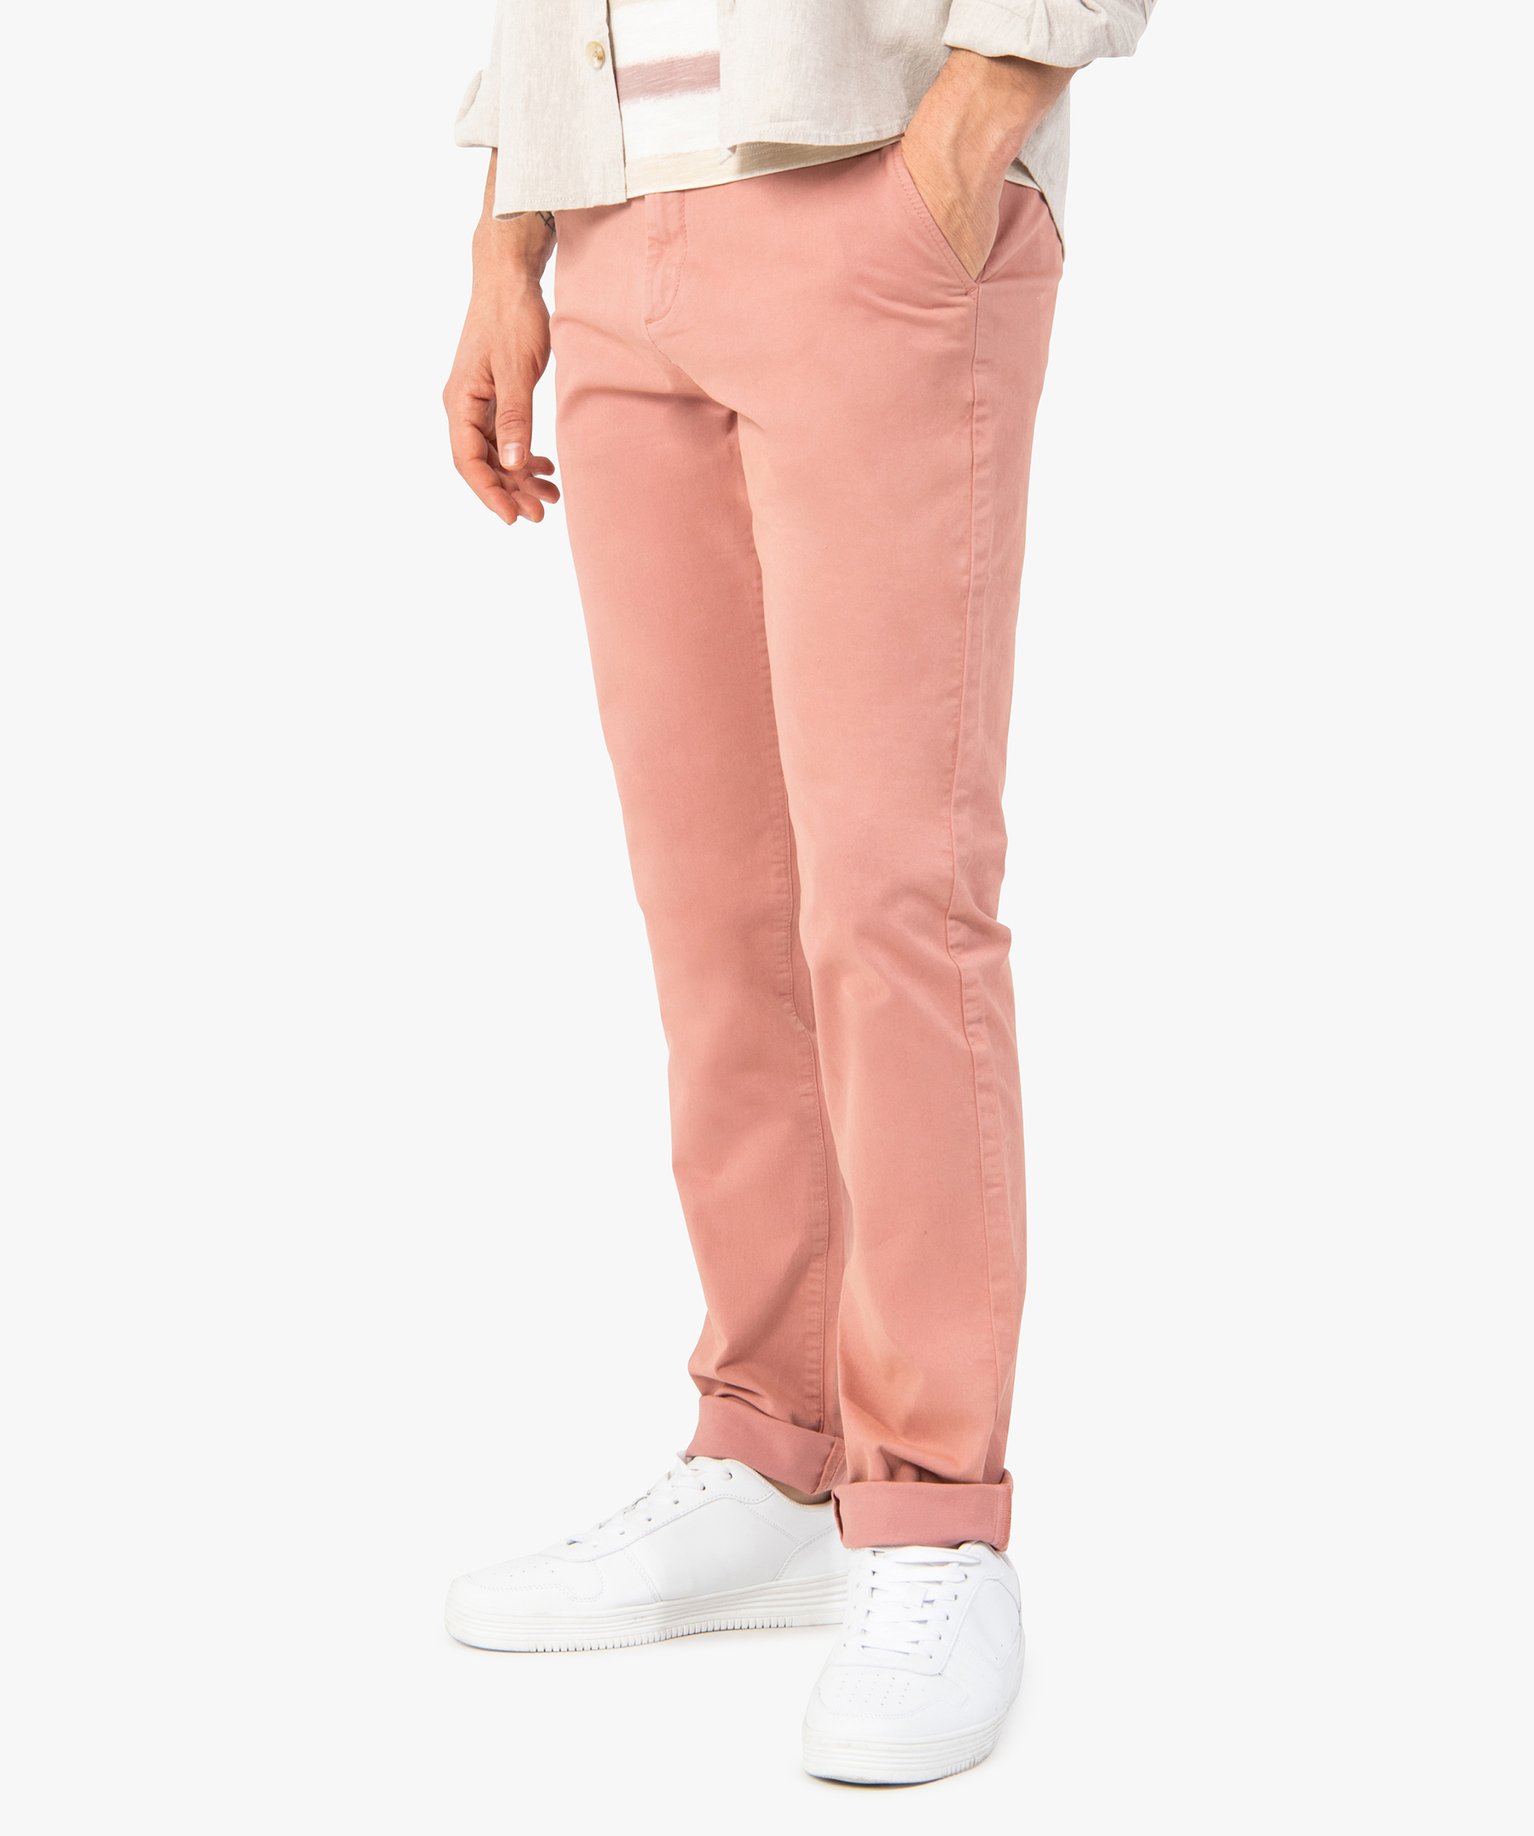 pantalon chino homme en coton stretch rose pantalons de costume